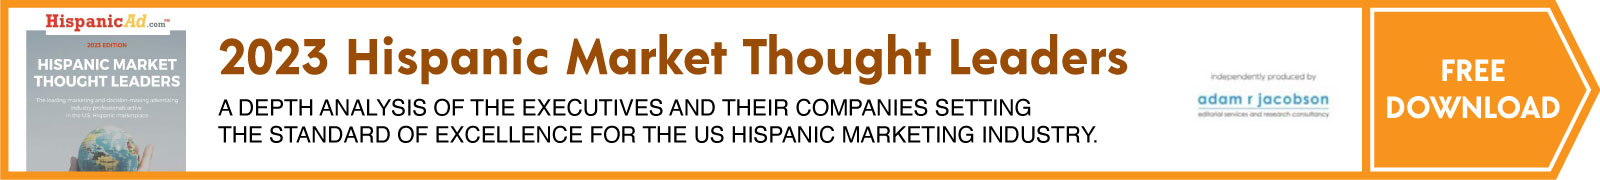 2023 Hispanic Market Thought Leaders